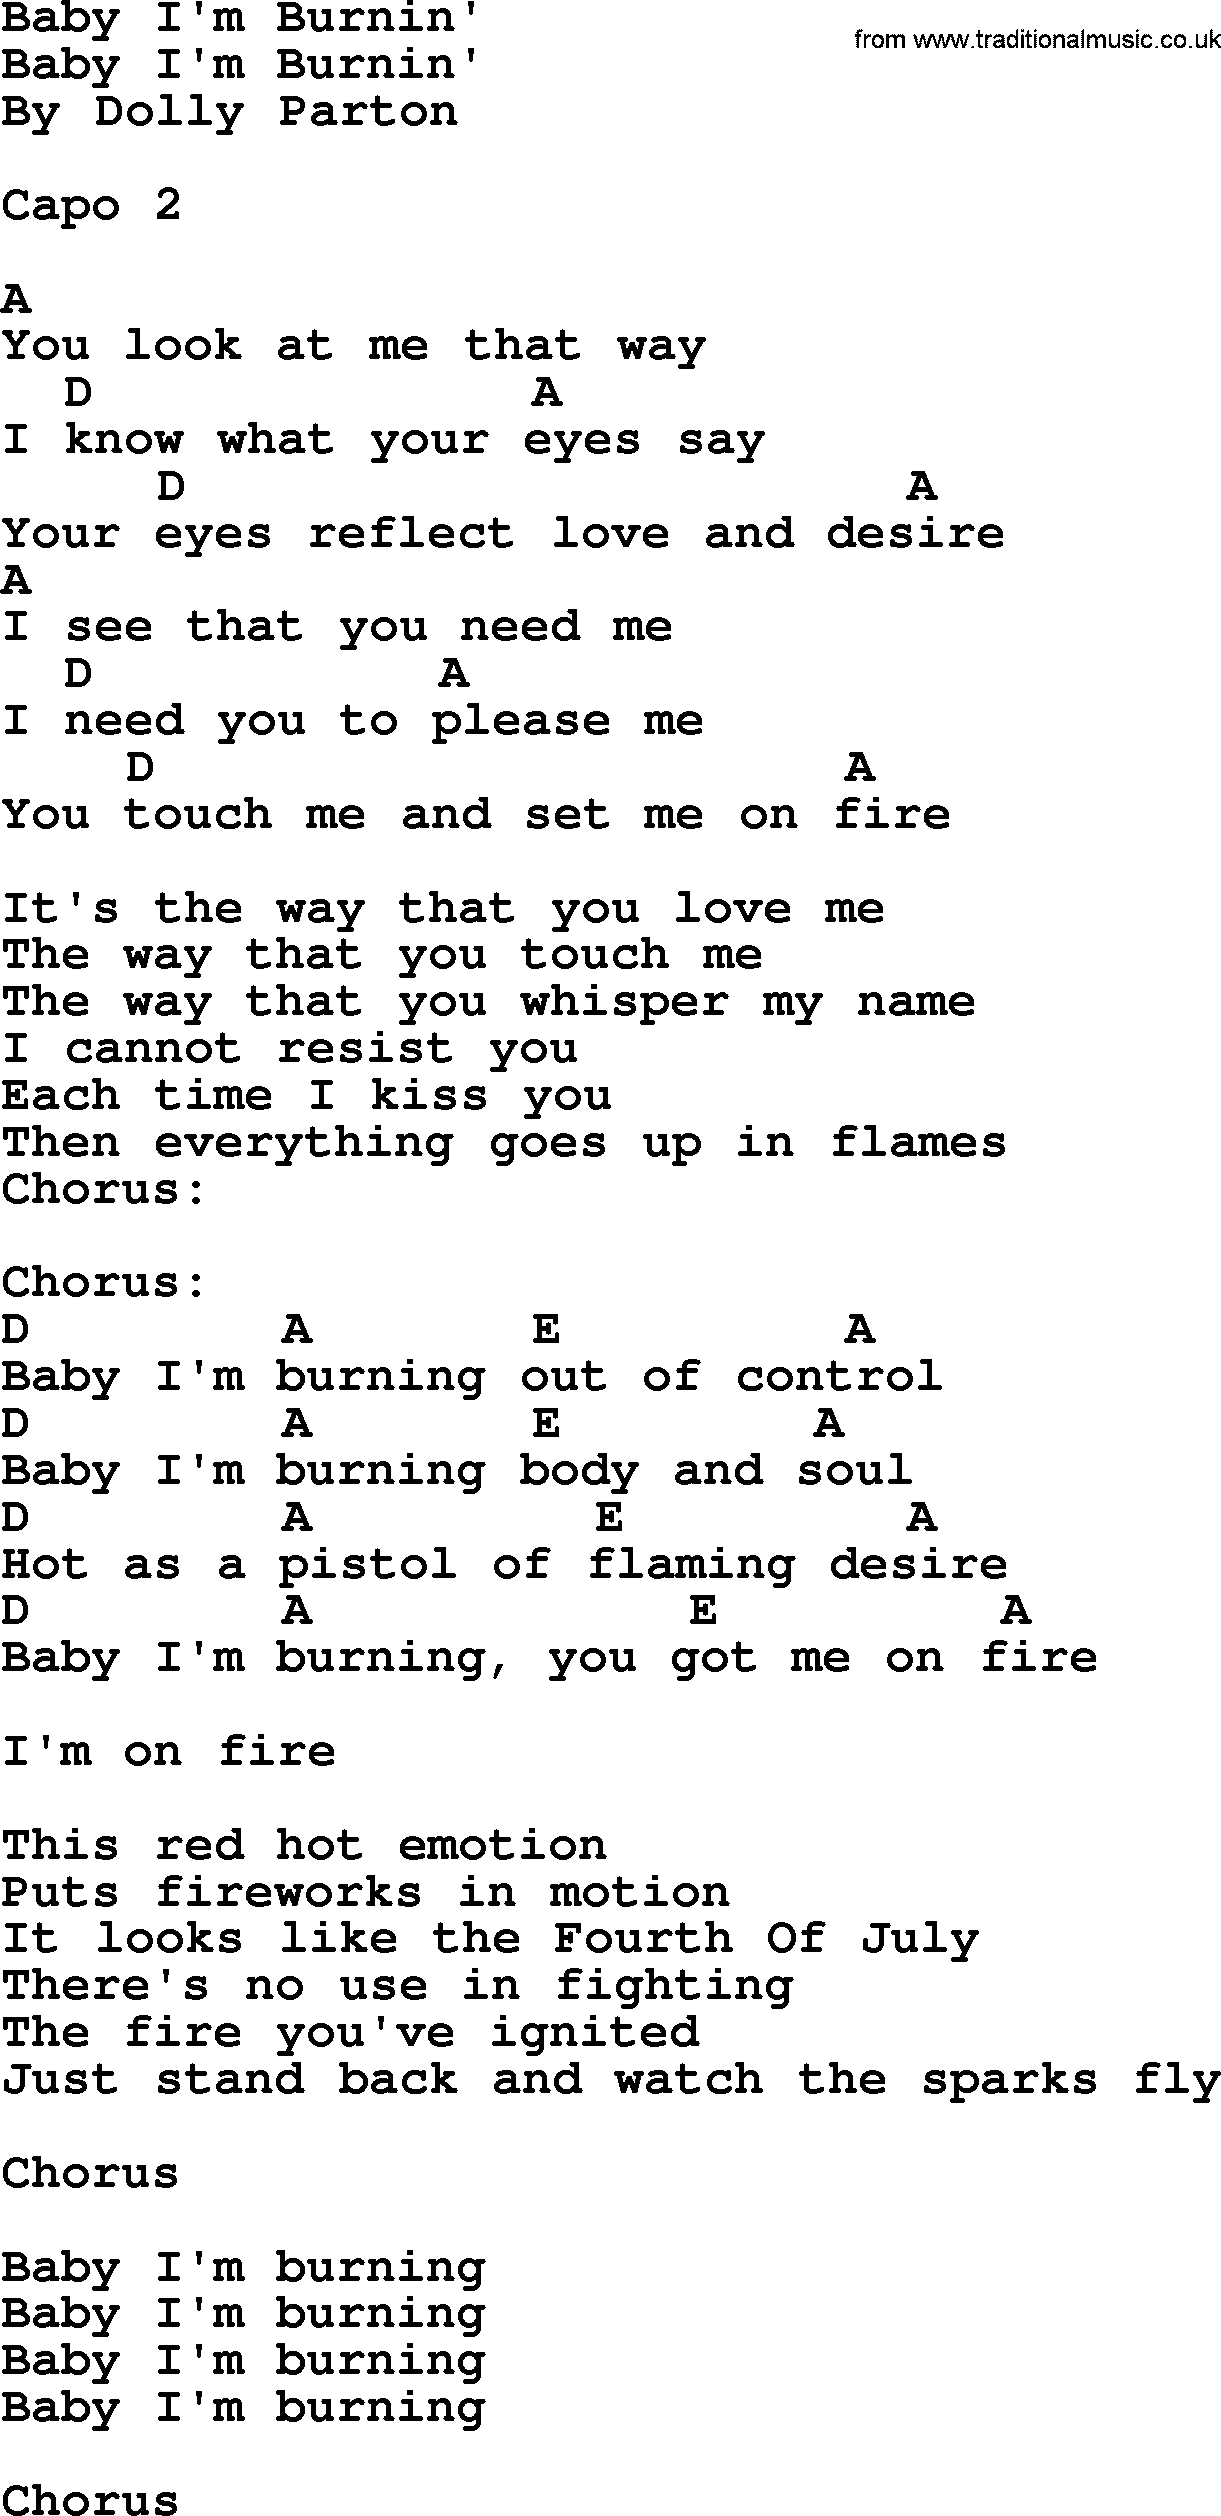 Bluegrass song: Baby I'm Burnin', lyrics and chords